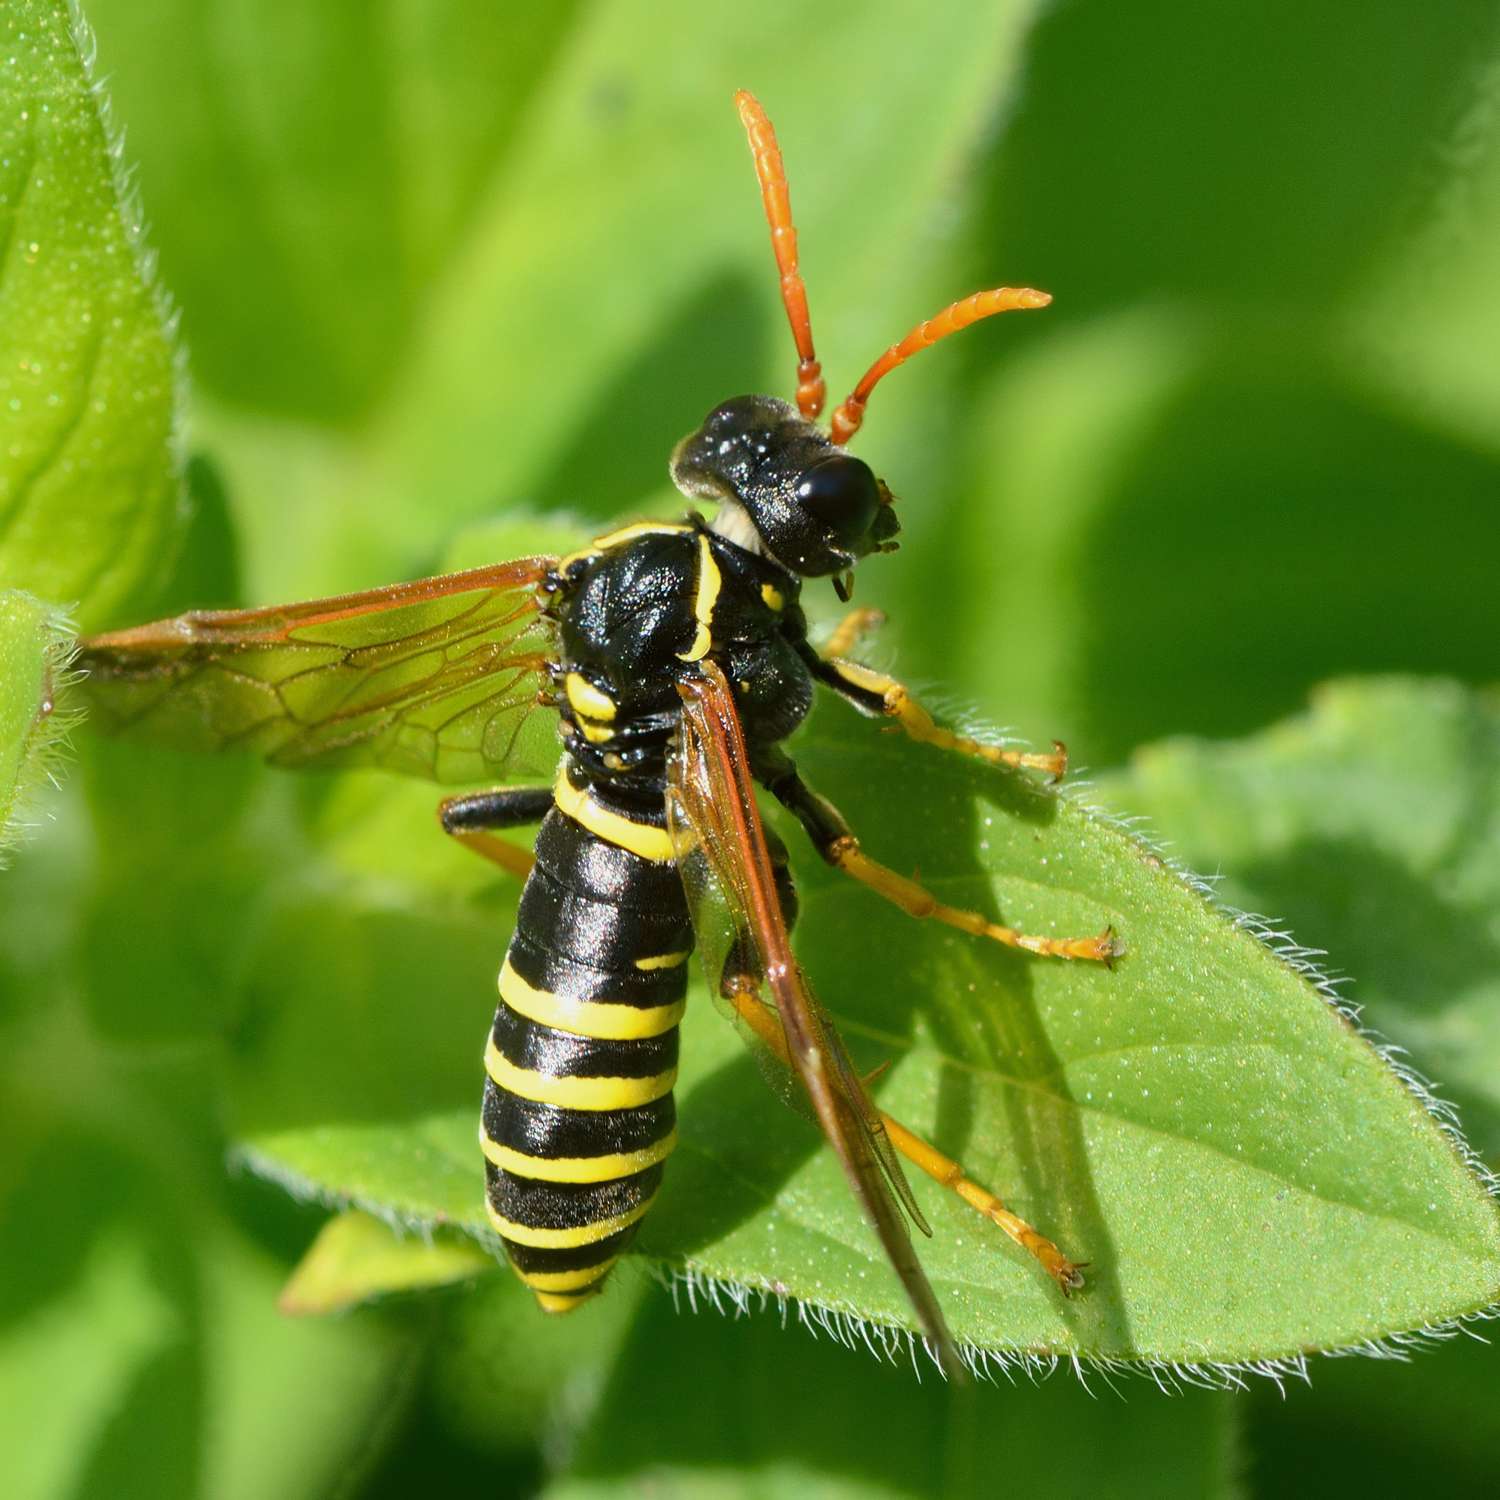 Unlike wasps, adult sawflies like this figwort sawfly have a broad waist